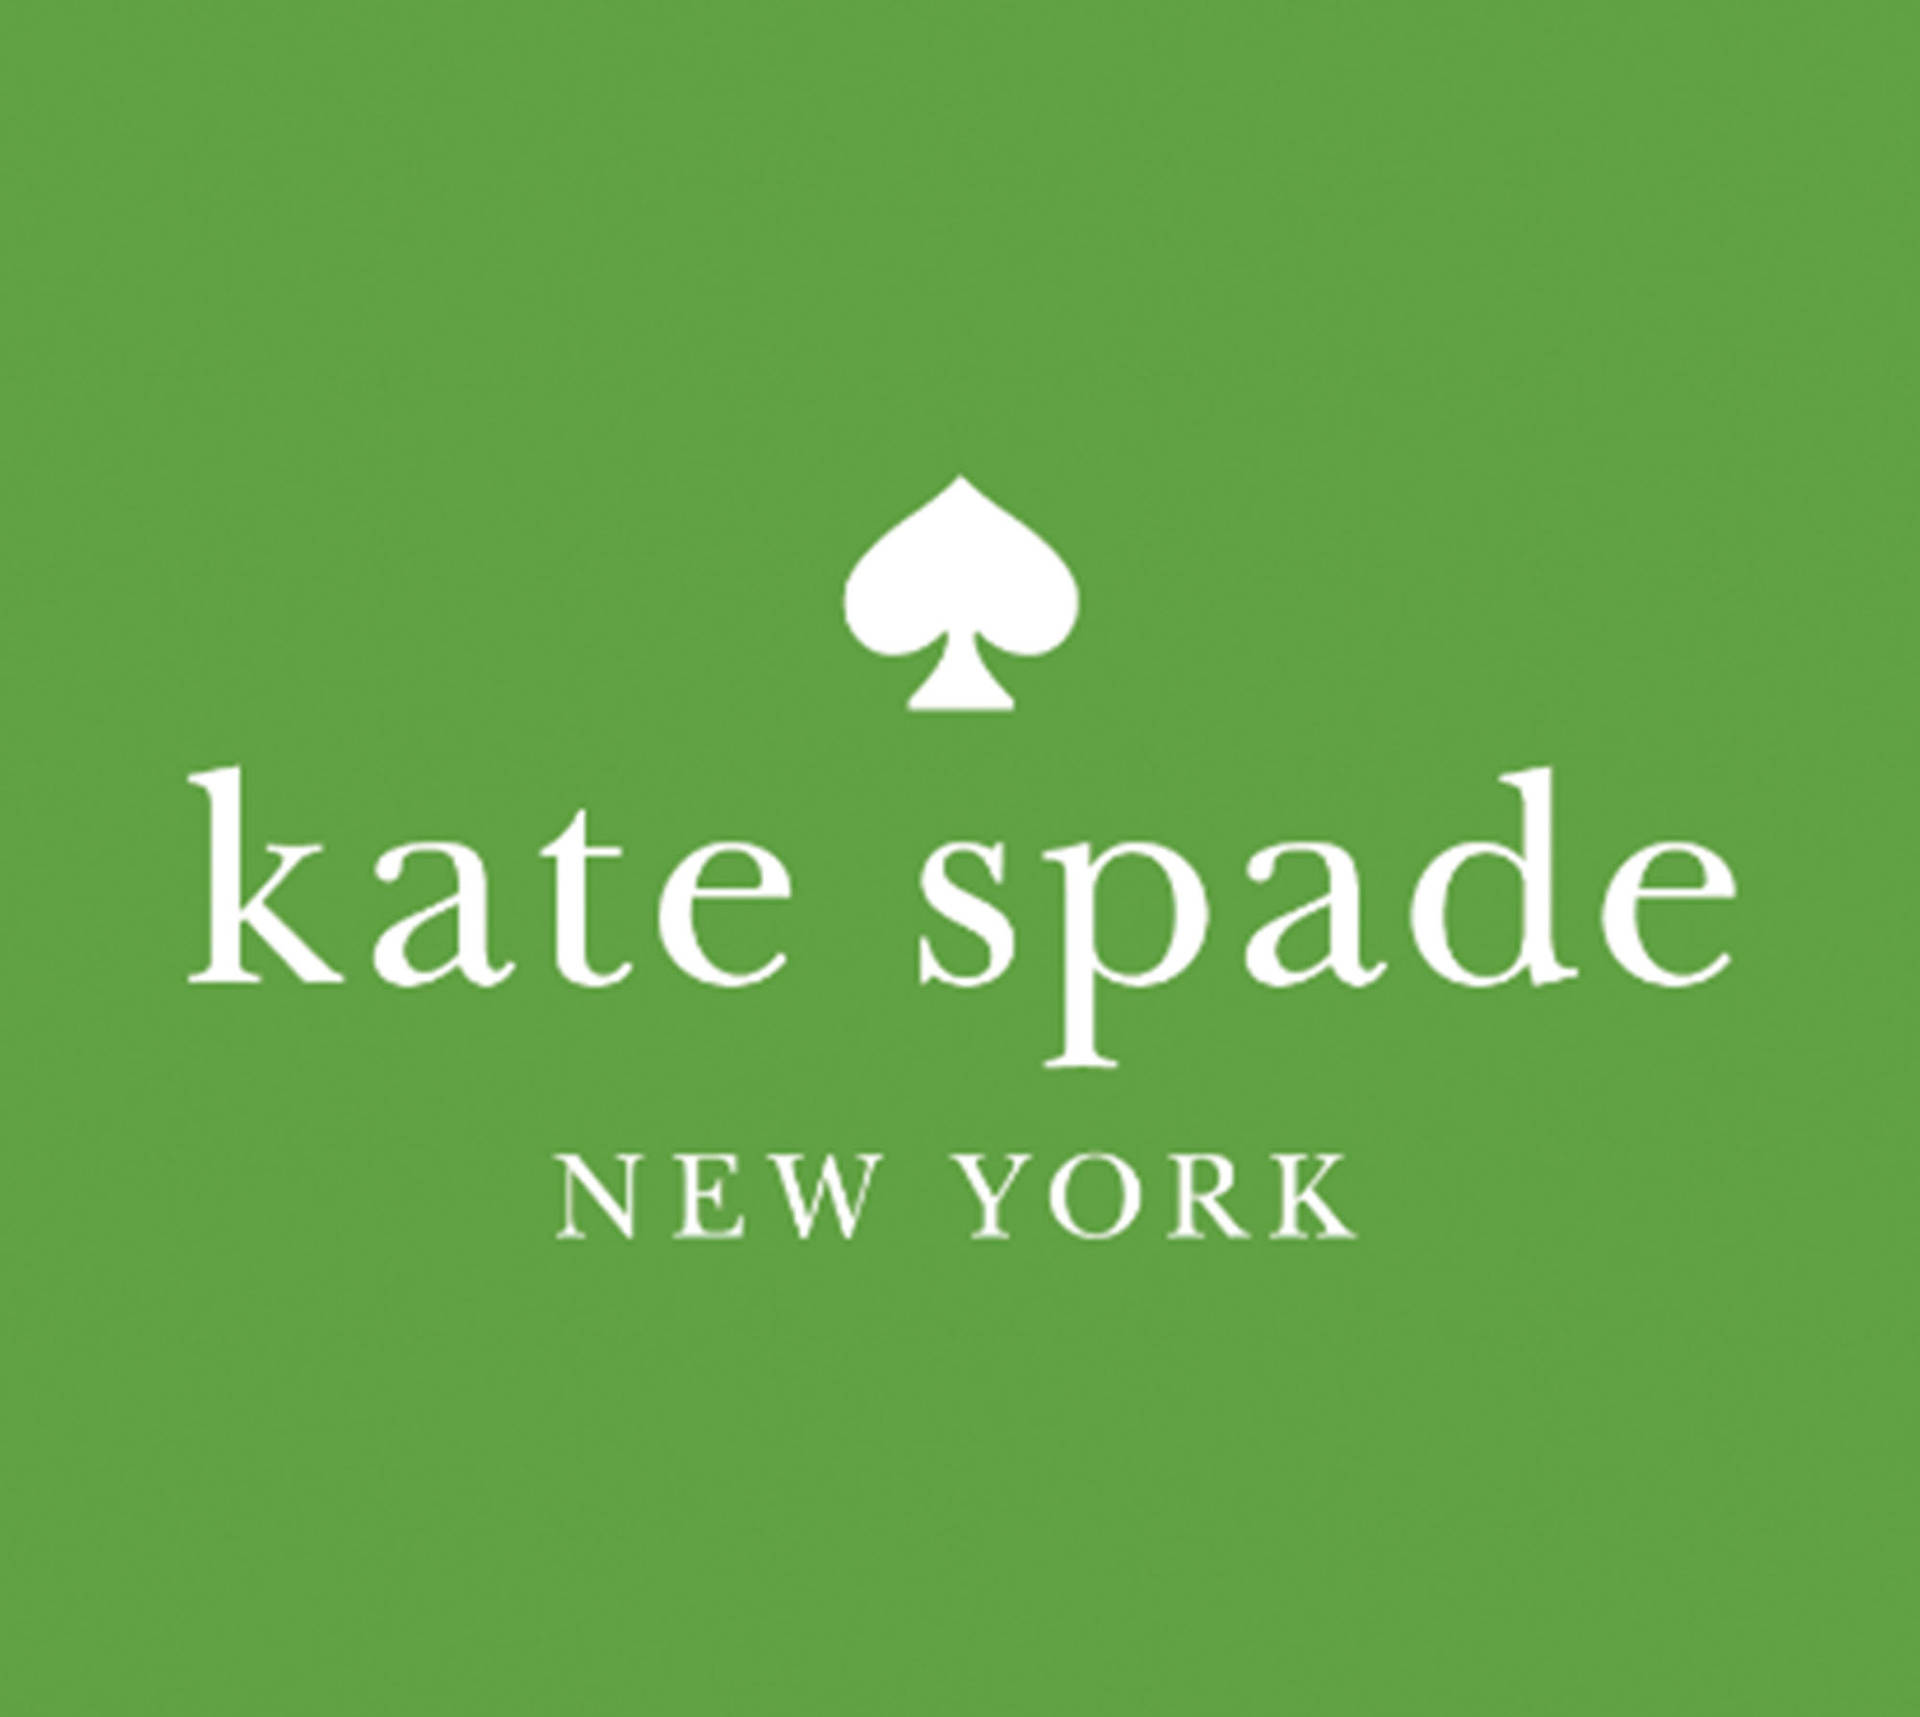 Kate Spade New York Grøn Plakat Favorit Skrivebordsbaggrund Wallpaper